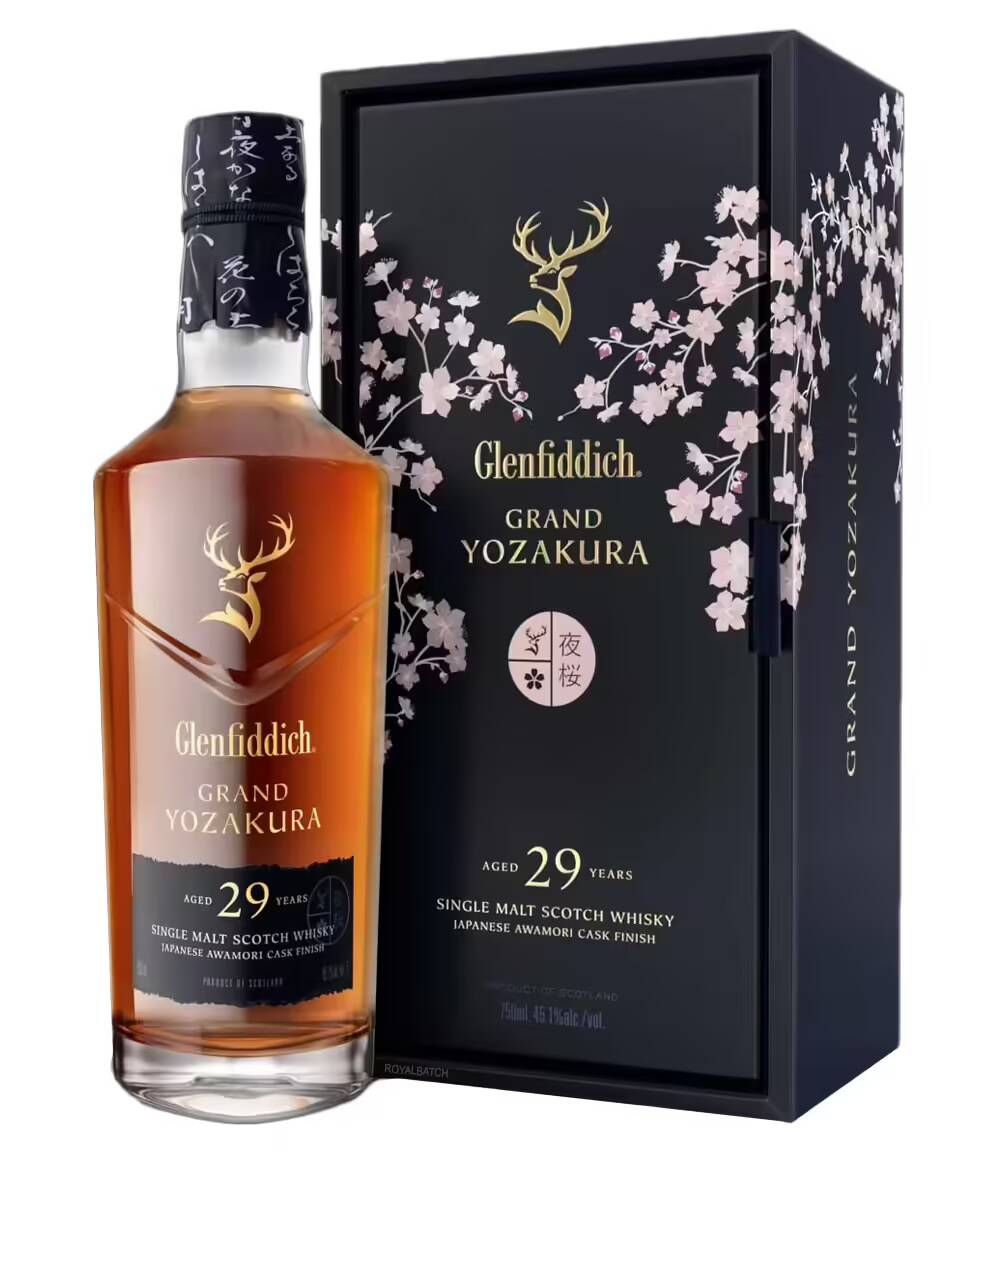 Glenfiddich Grand Yozakura 29 Year Old Single Malt Scotch Whisky